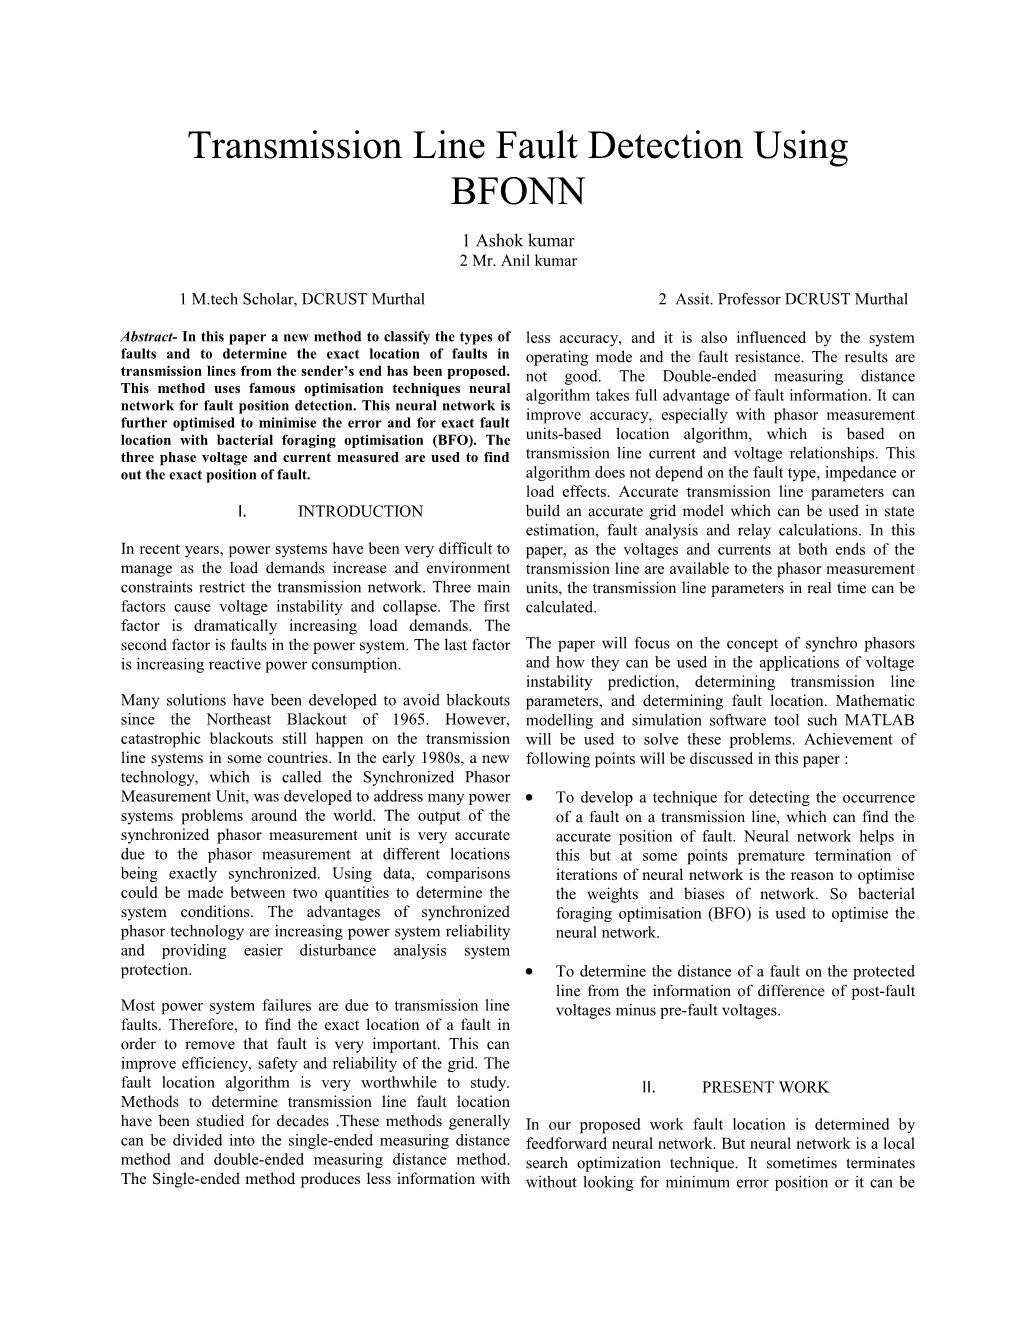 Transmission Line Fault Detection Using BFONN